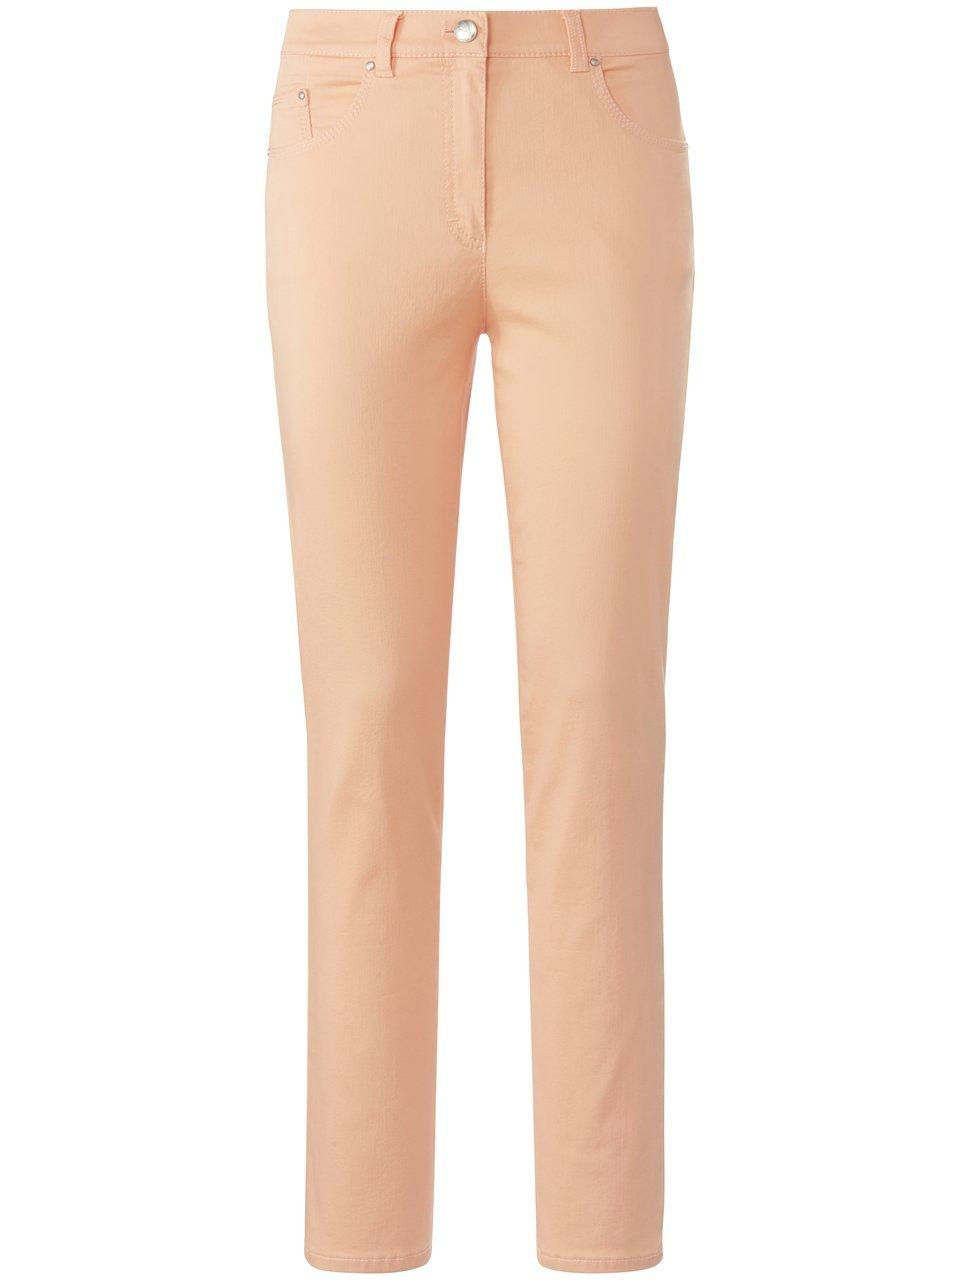 Corrigerende Proform S Super Slim-jeans model Lea Van Raphaela by Brax oranje